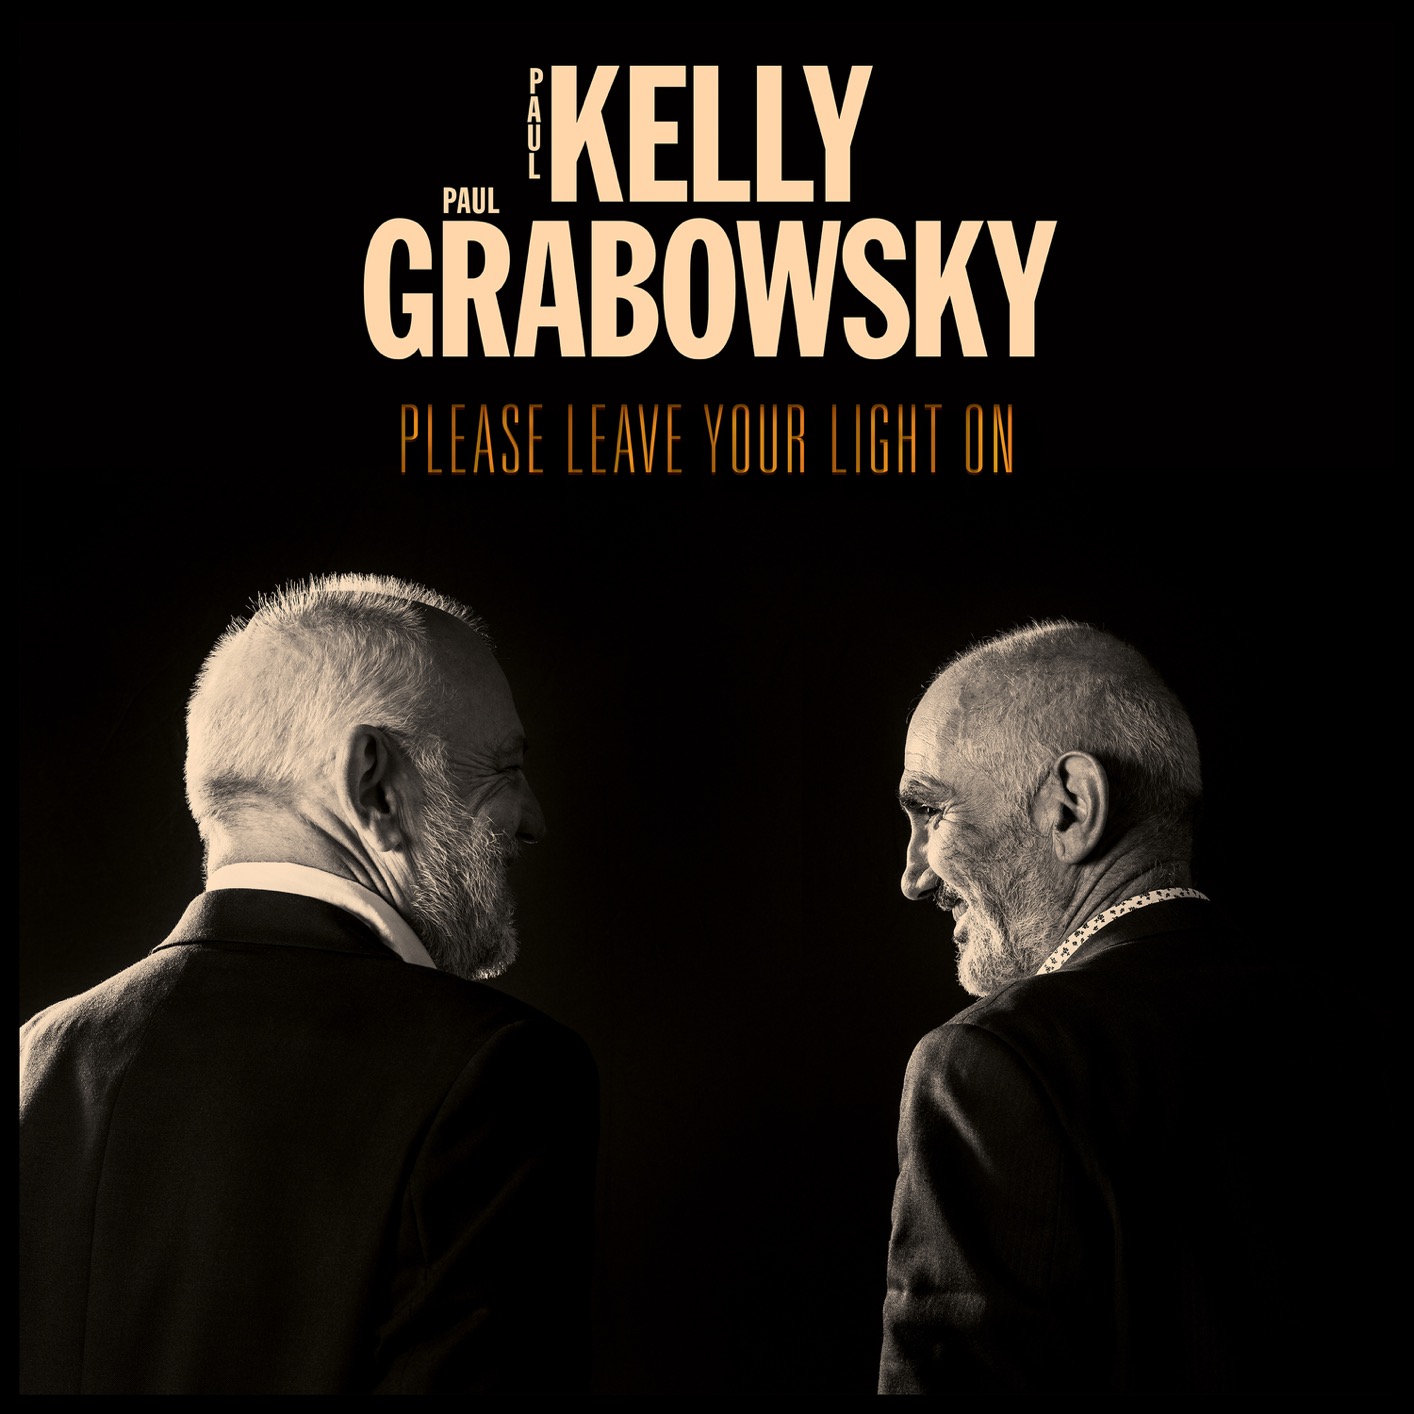 Paul Kelly & Paul Grabowsky – Please Leave Your Light On (2020) [FLAC 24bit/48kHz]